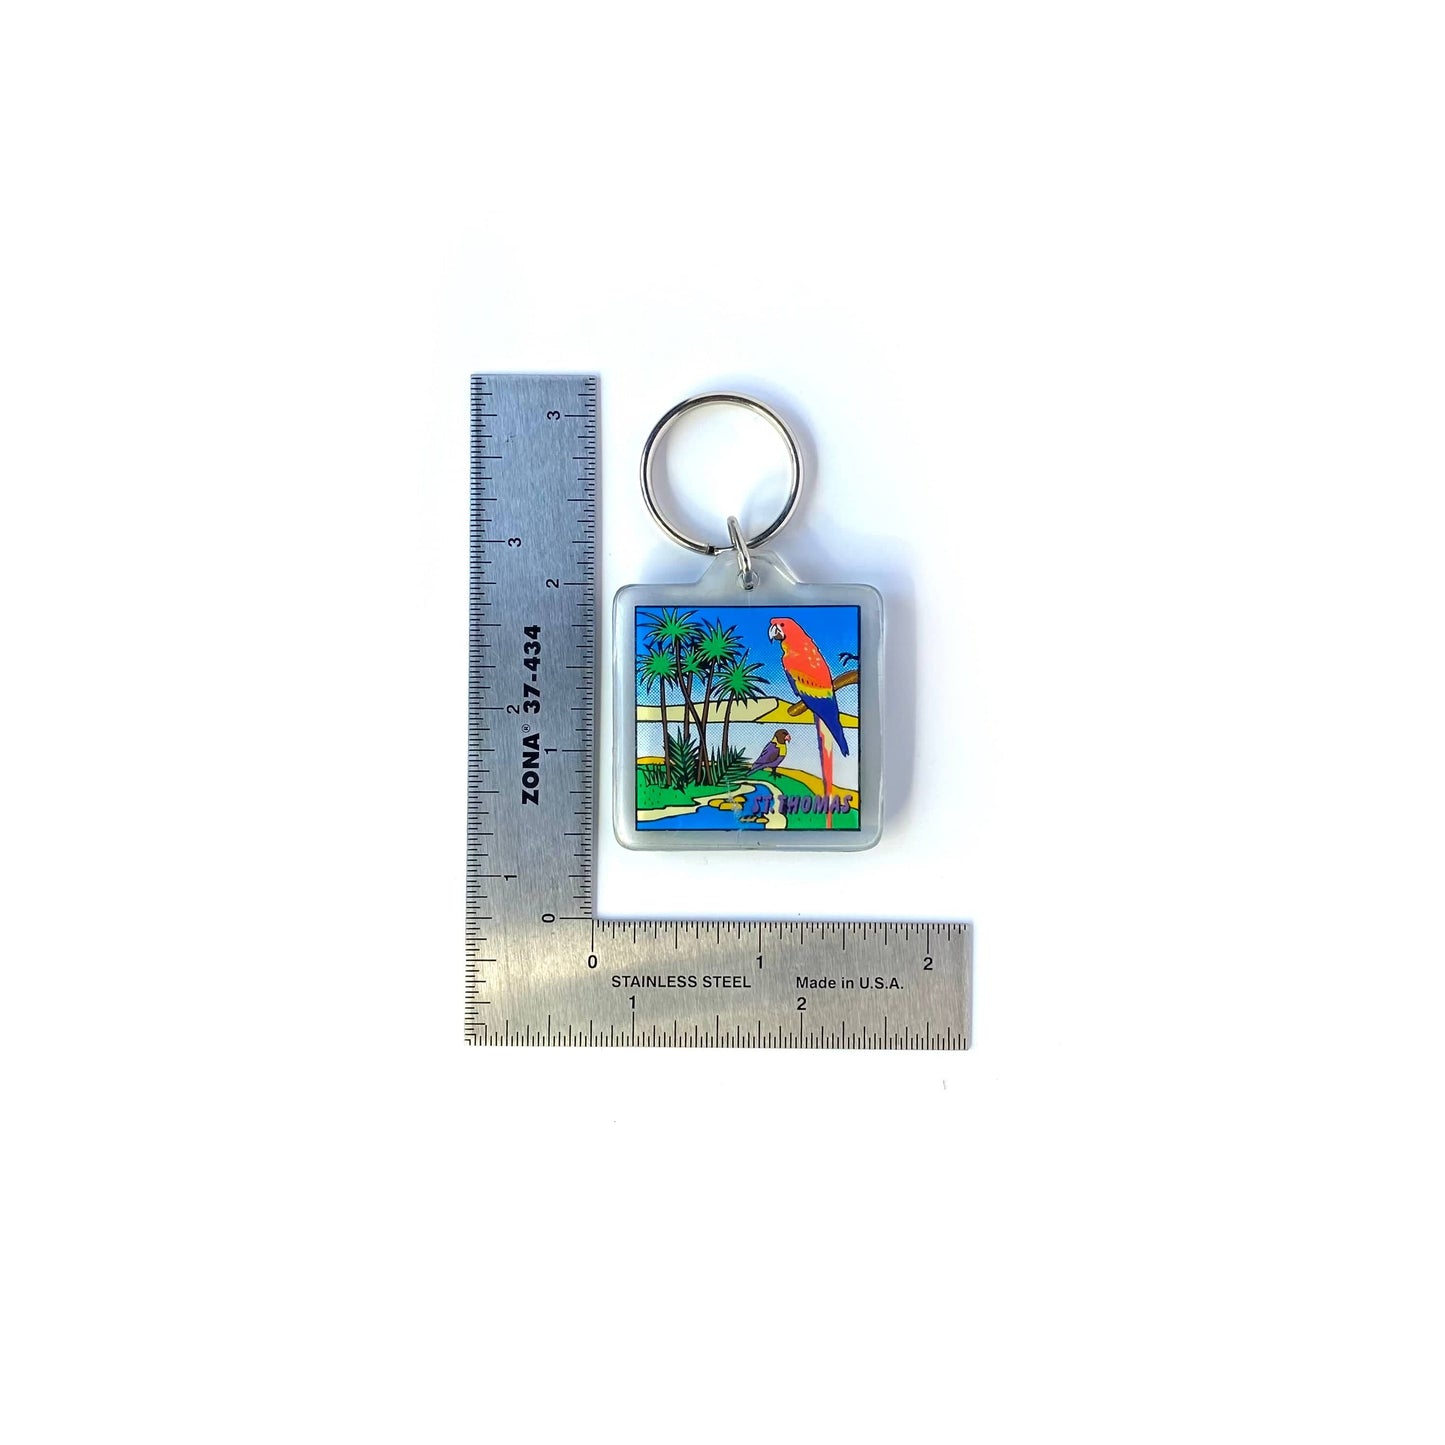 St. Thomas VI Travel Souvenir Keychain Key Ring Square Clear Acrylic